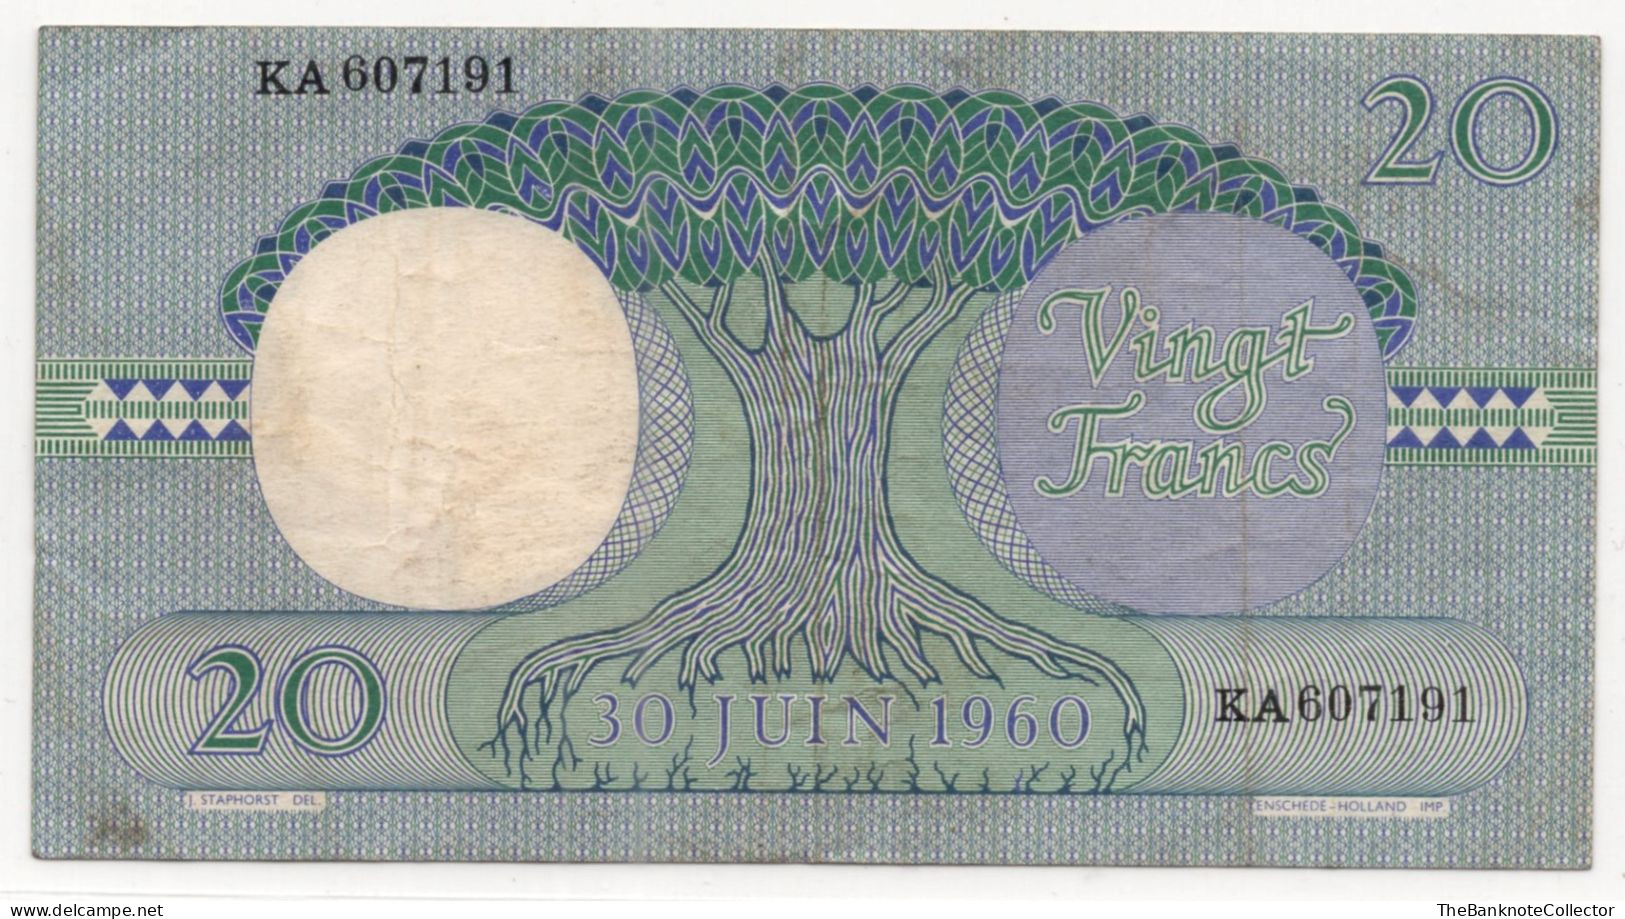 Congo 20 Francs 1962 P-4 Very Fine - Republic Of Congo (Congo-Brazzaville)